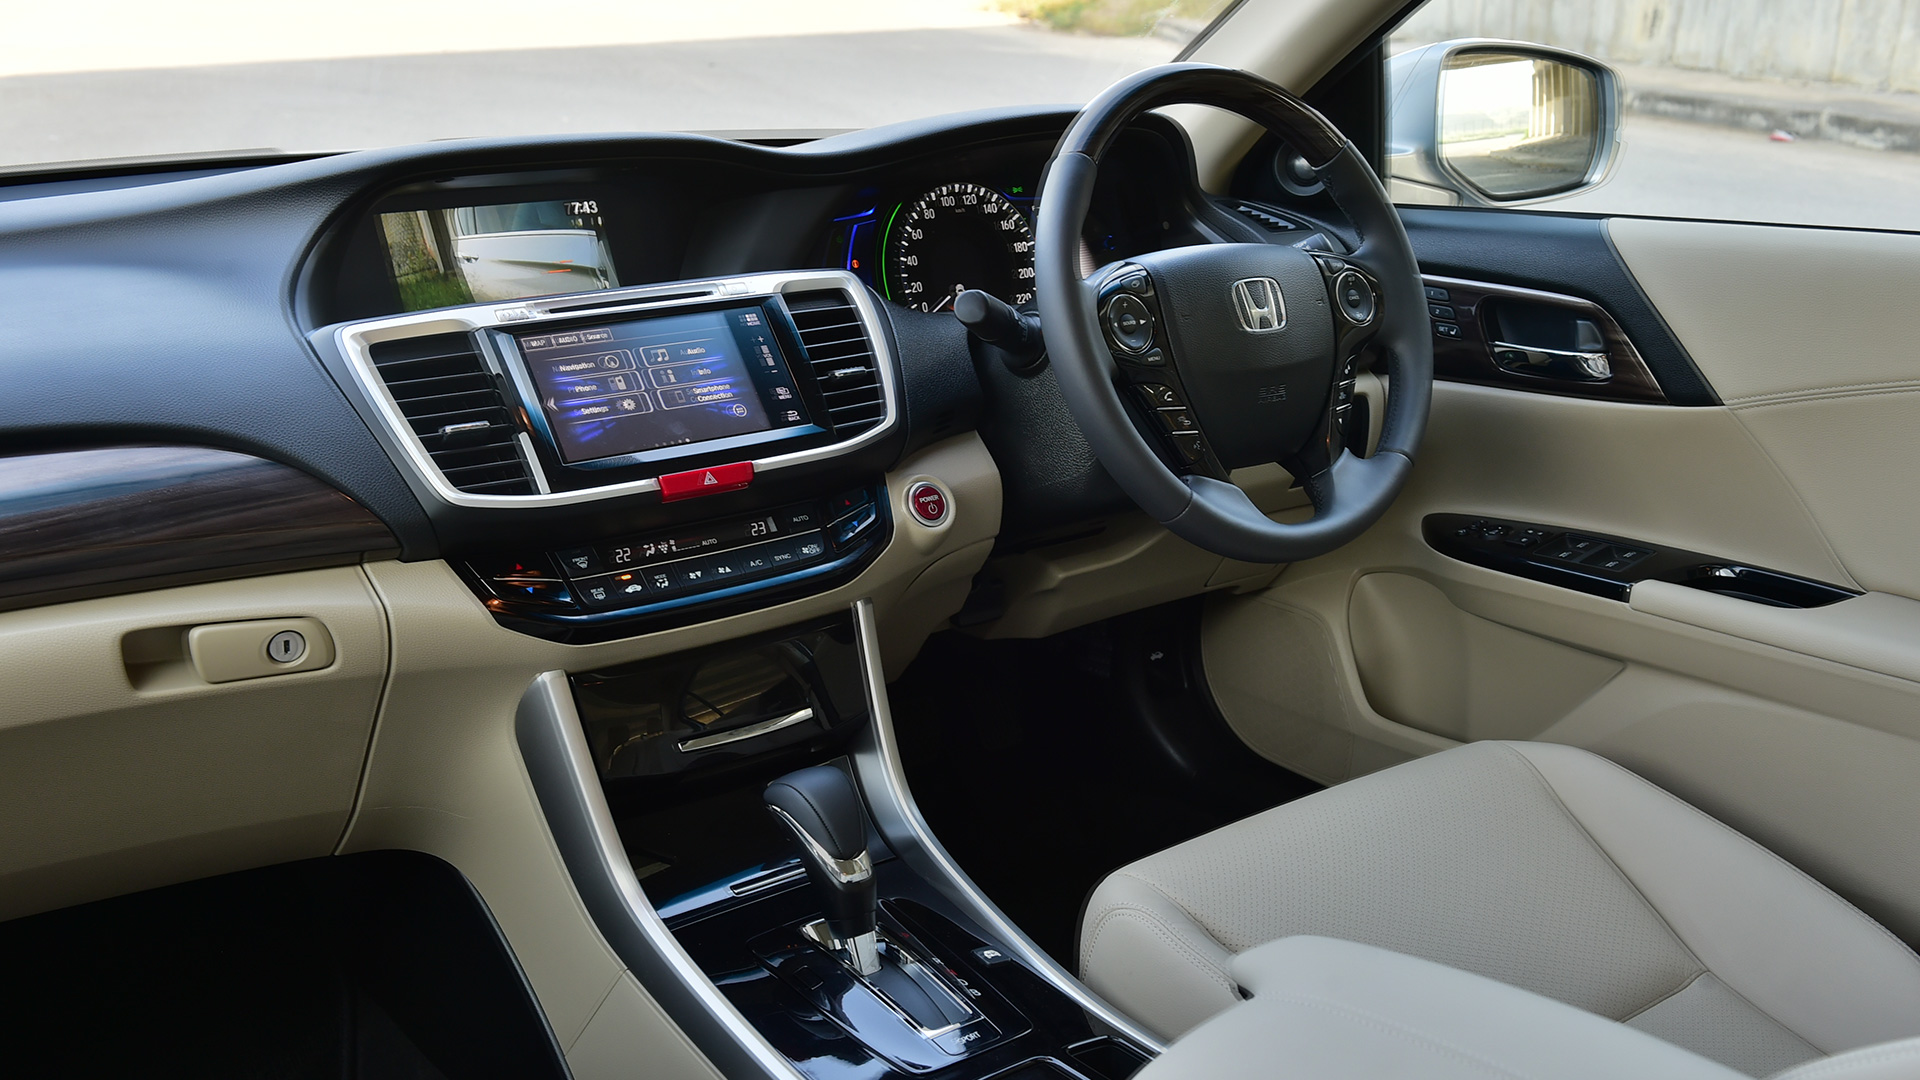 Honda Accord Hybrid 2016 Std Interior Car Photos Overdrive